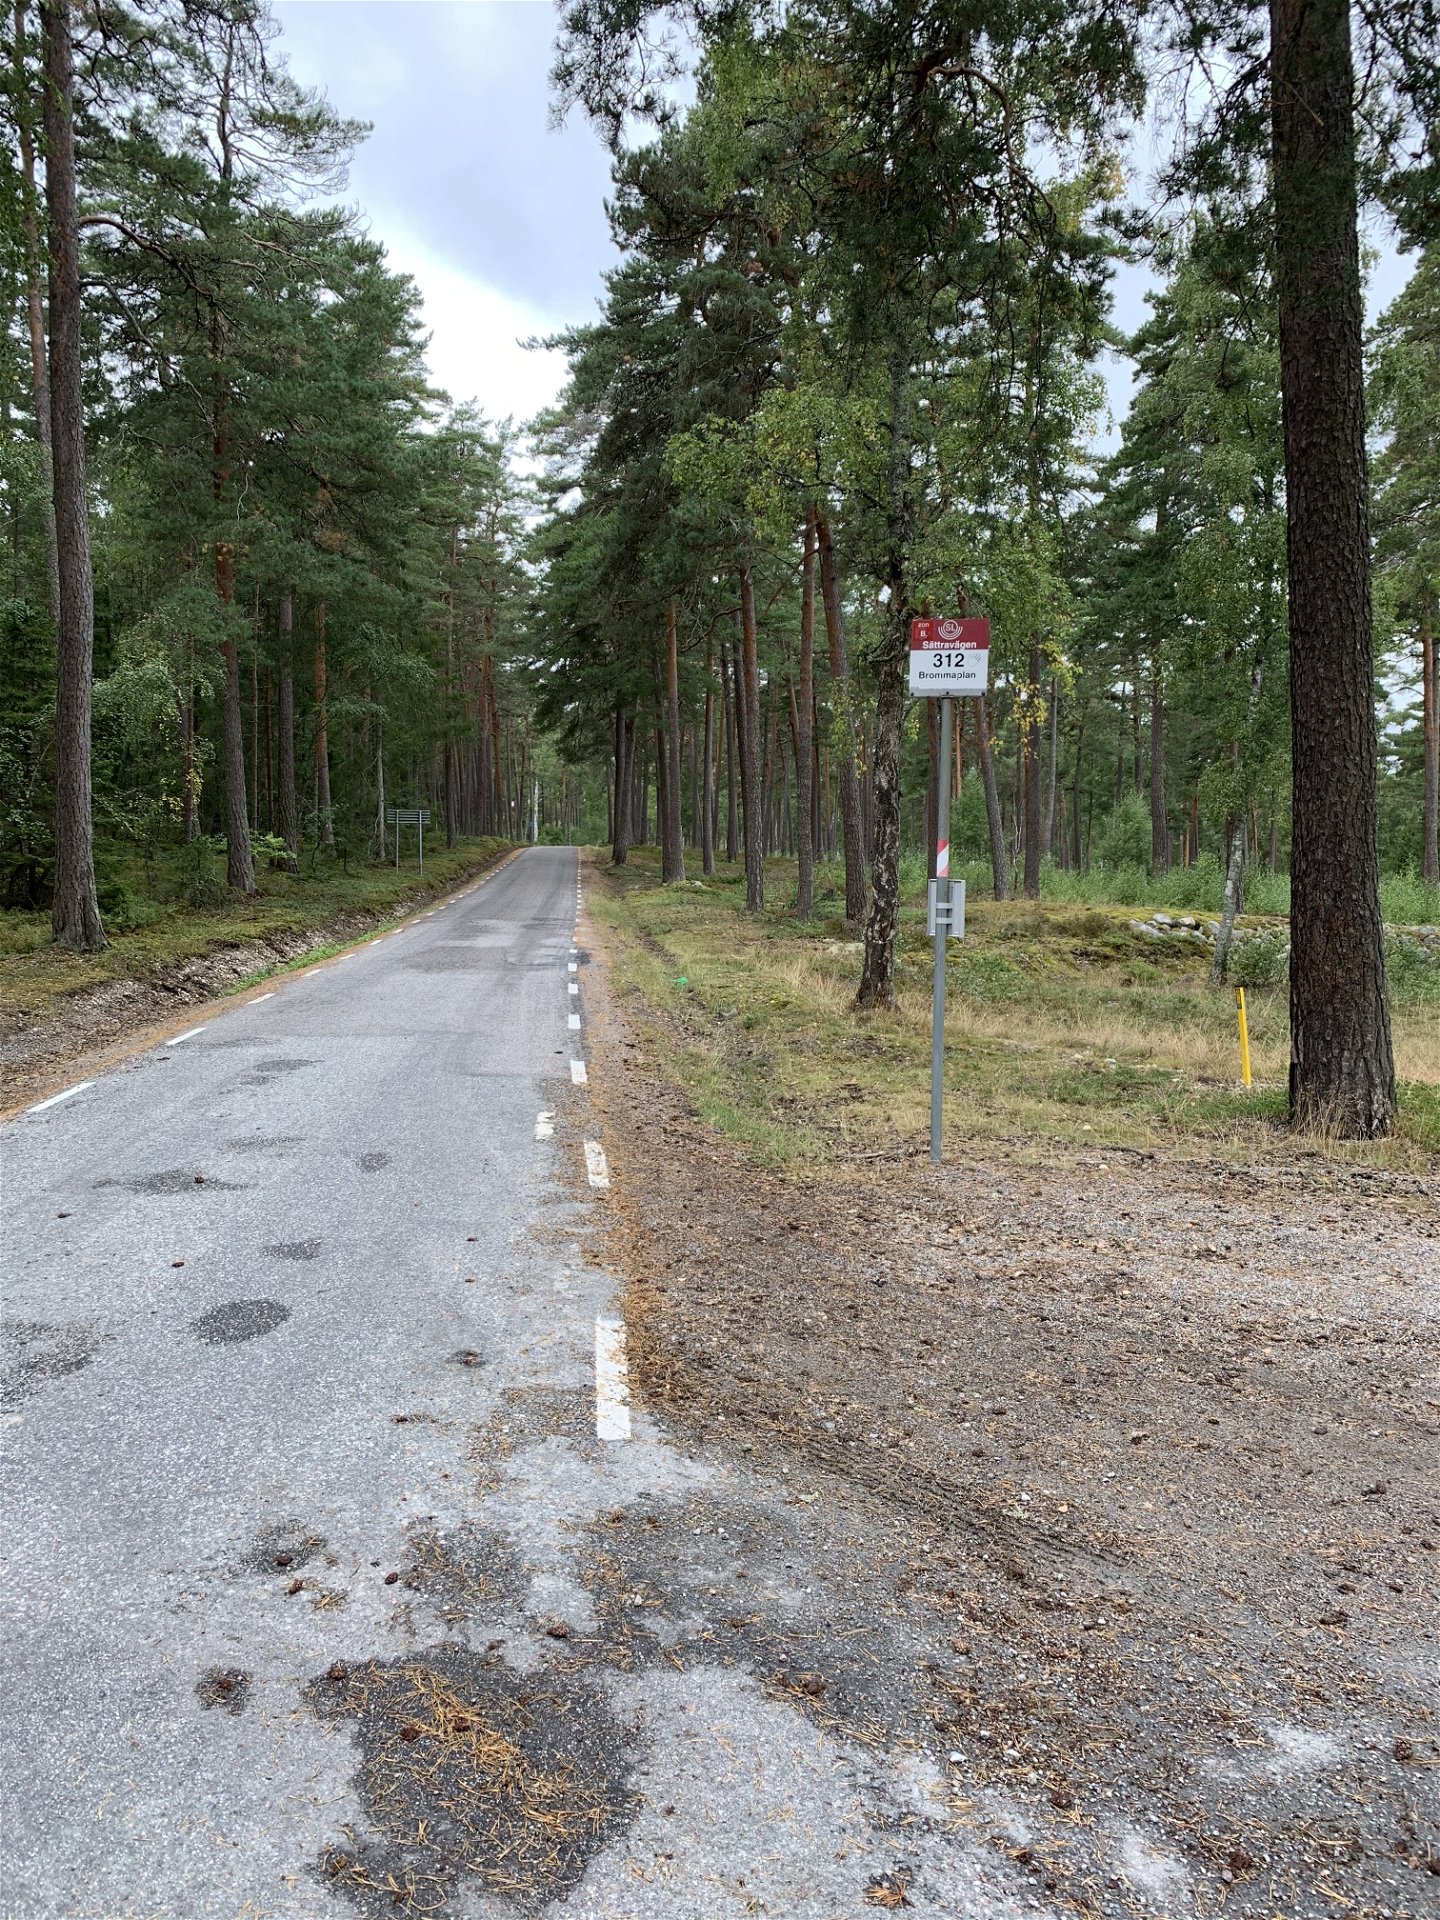 Sättravägen bus stop looking westward. (Walk in this direction to reach the nature reserve.)